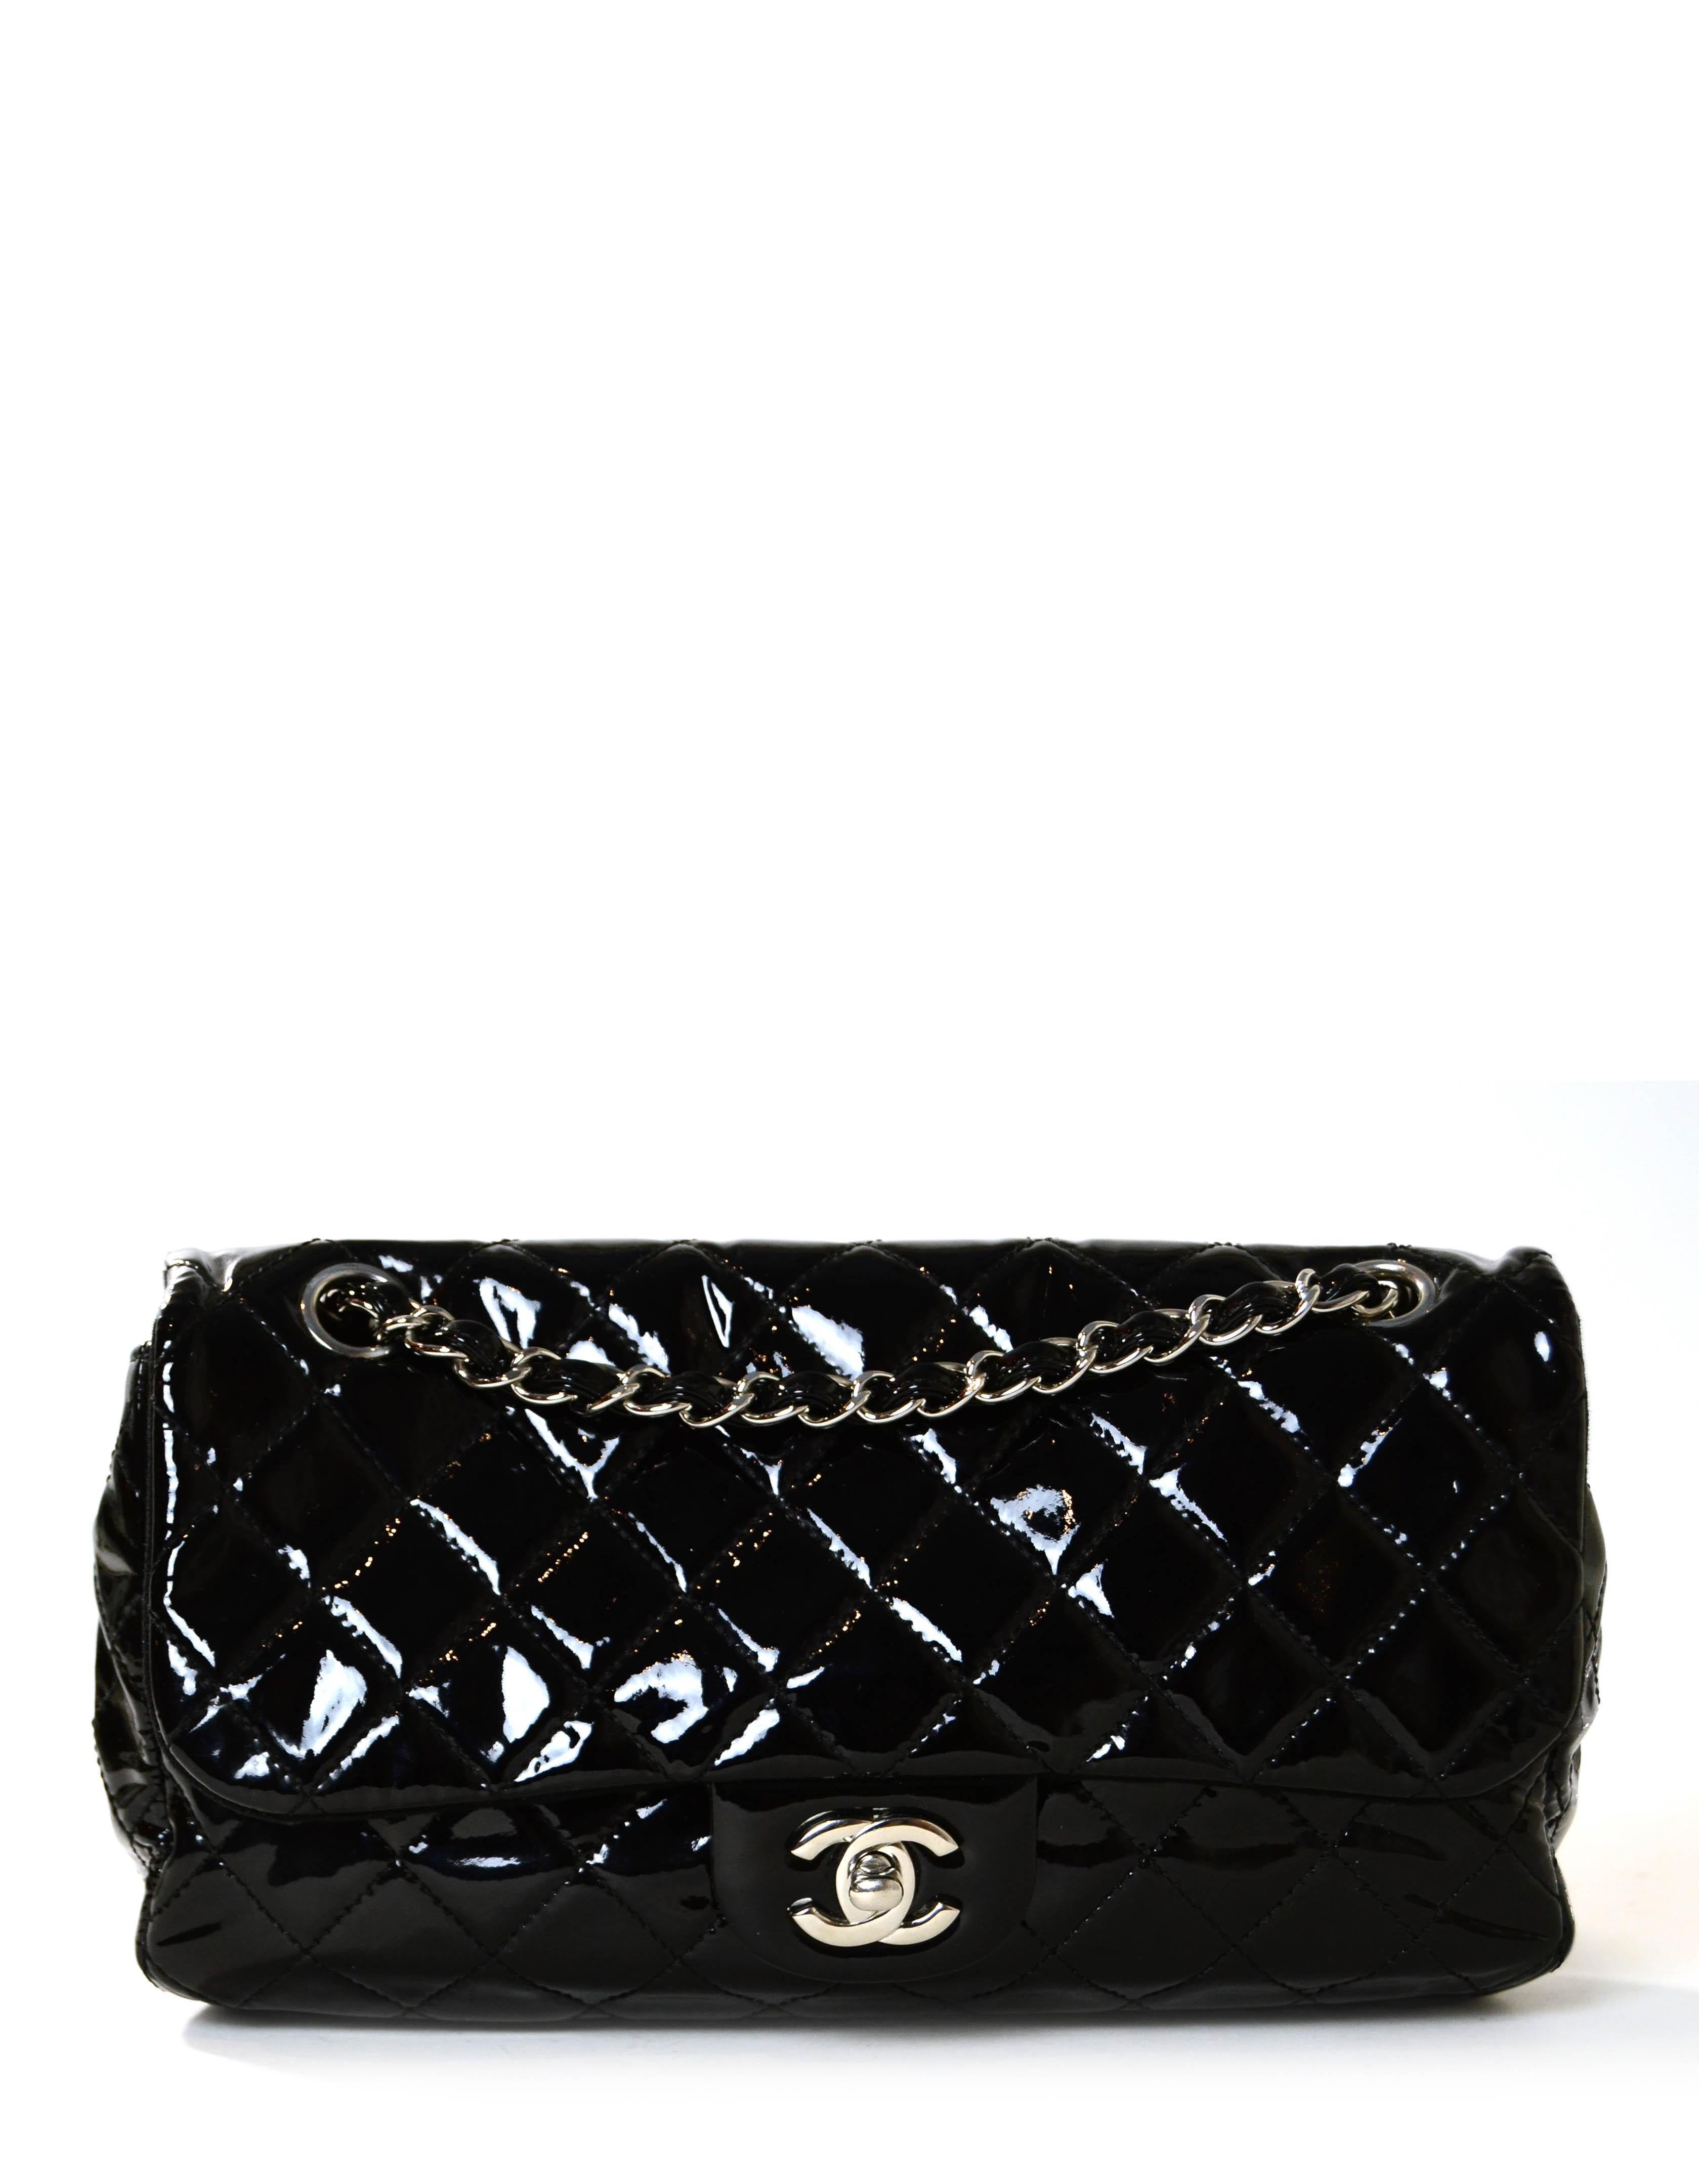 Chanel Ltd Edition Black Mesh & Patent La Madrague 2 in 1 Tote/ Classic Flap Bag 1